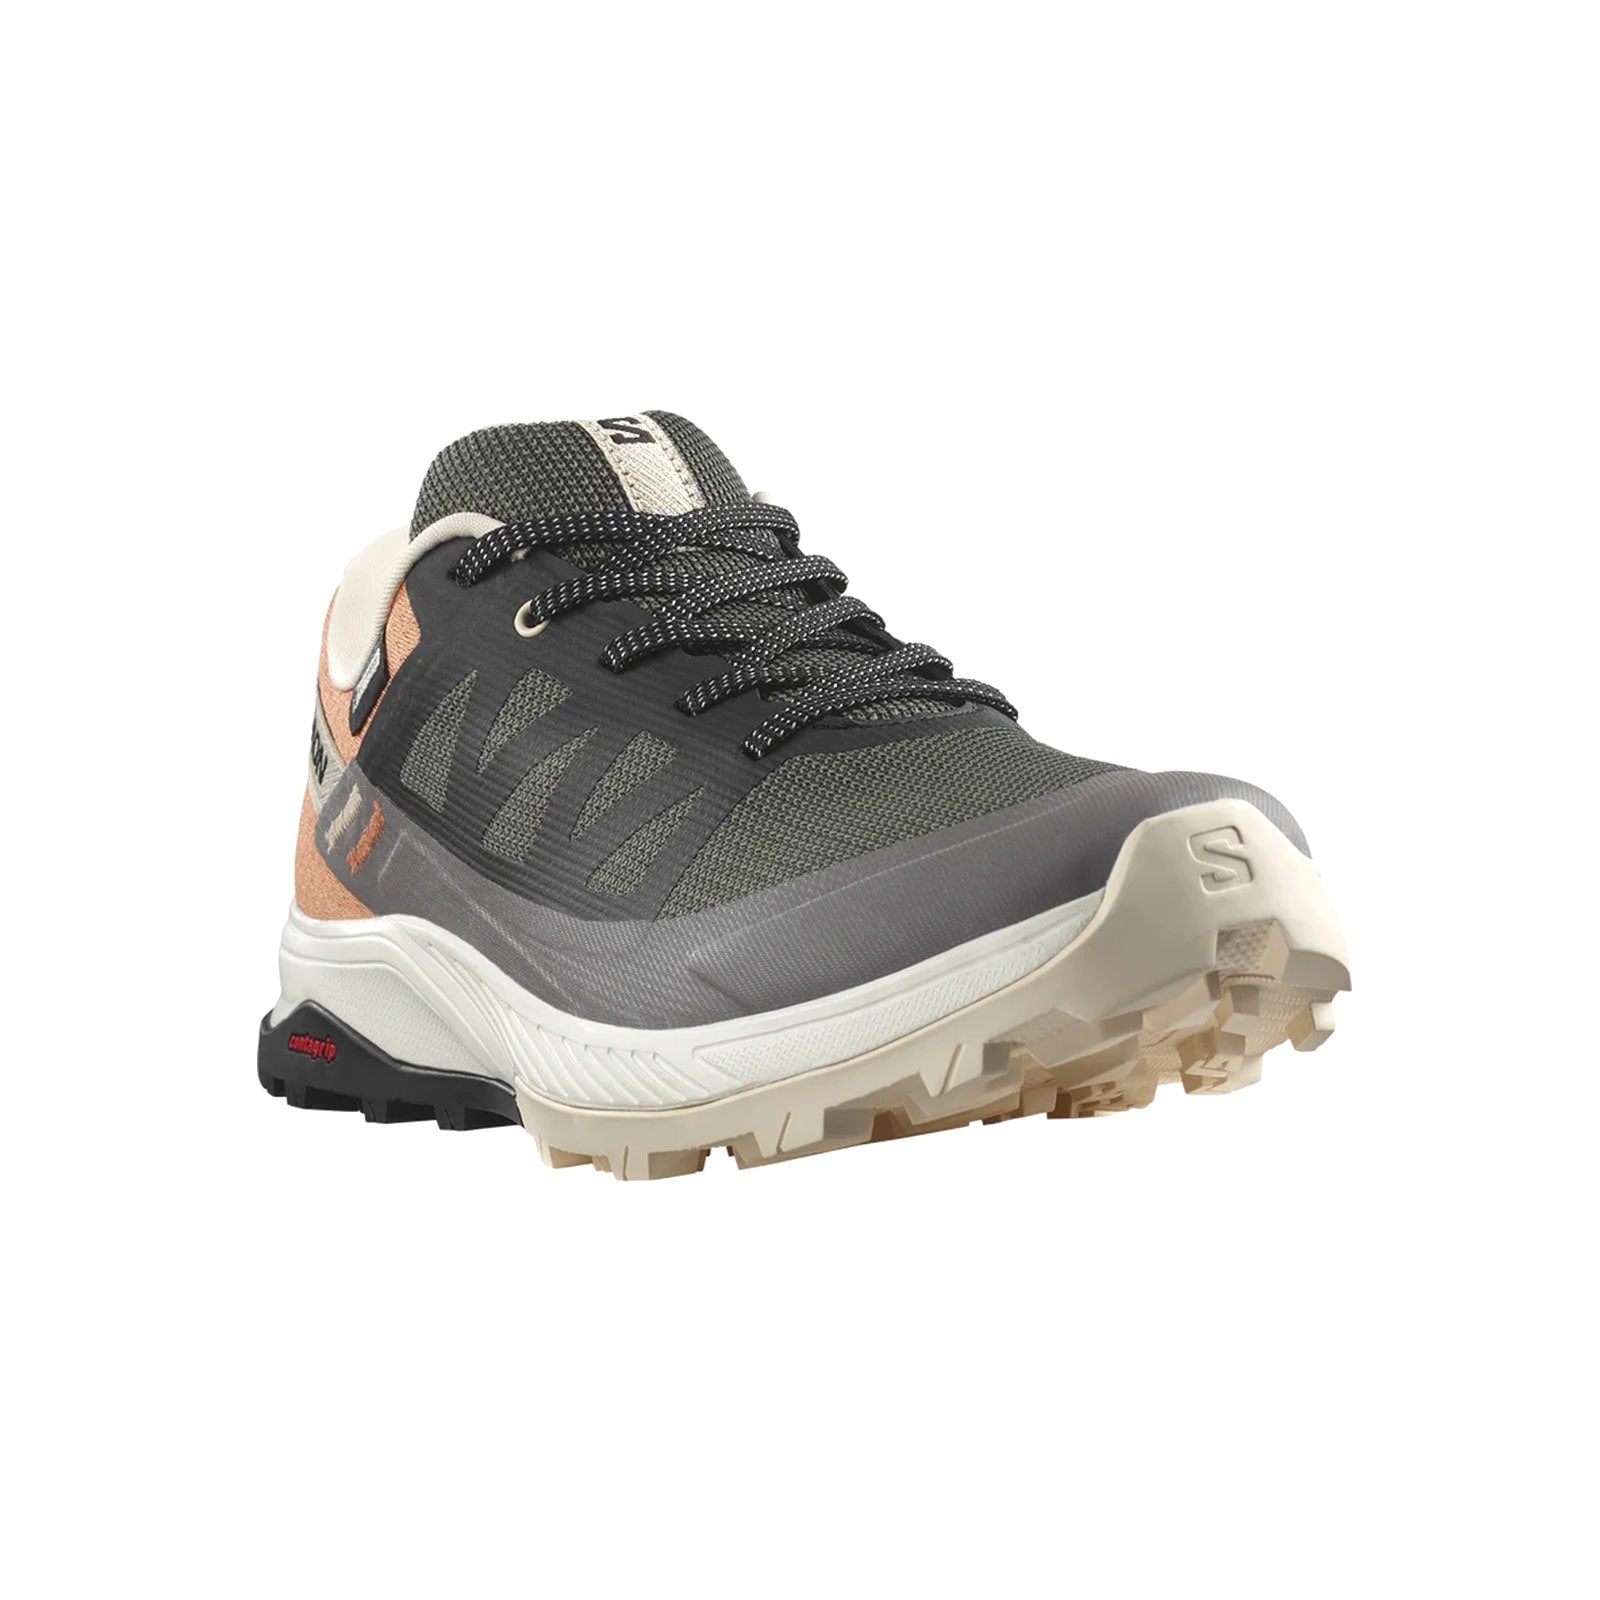 Outrise ClimaSalomon Waterproof Hiking Shoe (Women) - Magnet/B The Heel Shoe Fitters